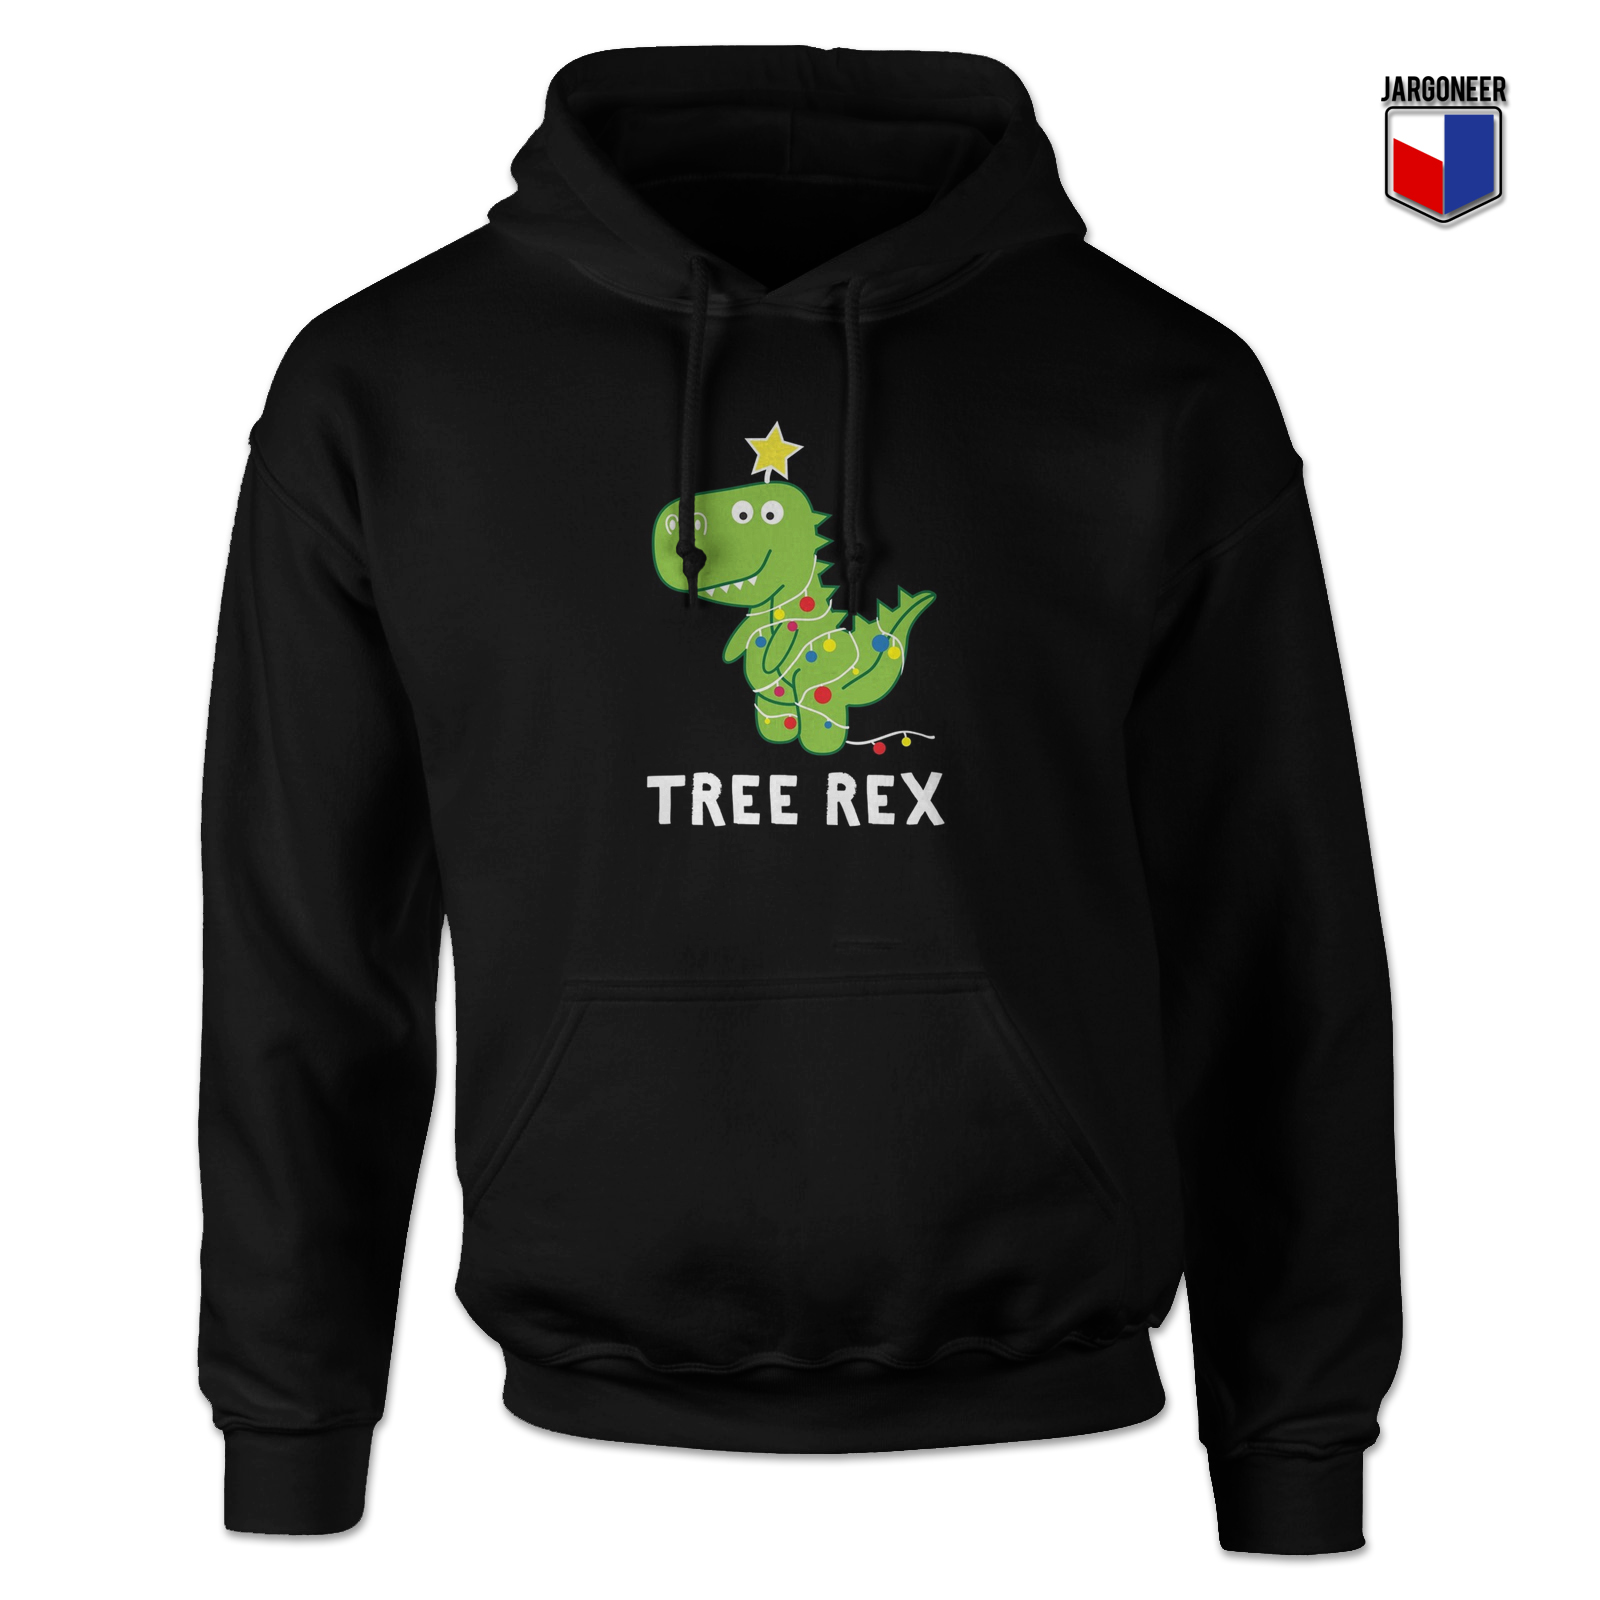 Christmas Tree Rex Parody Hoodie - Shop Unique Graphic Cool Shirt Designs